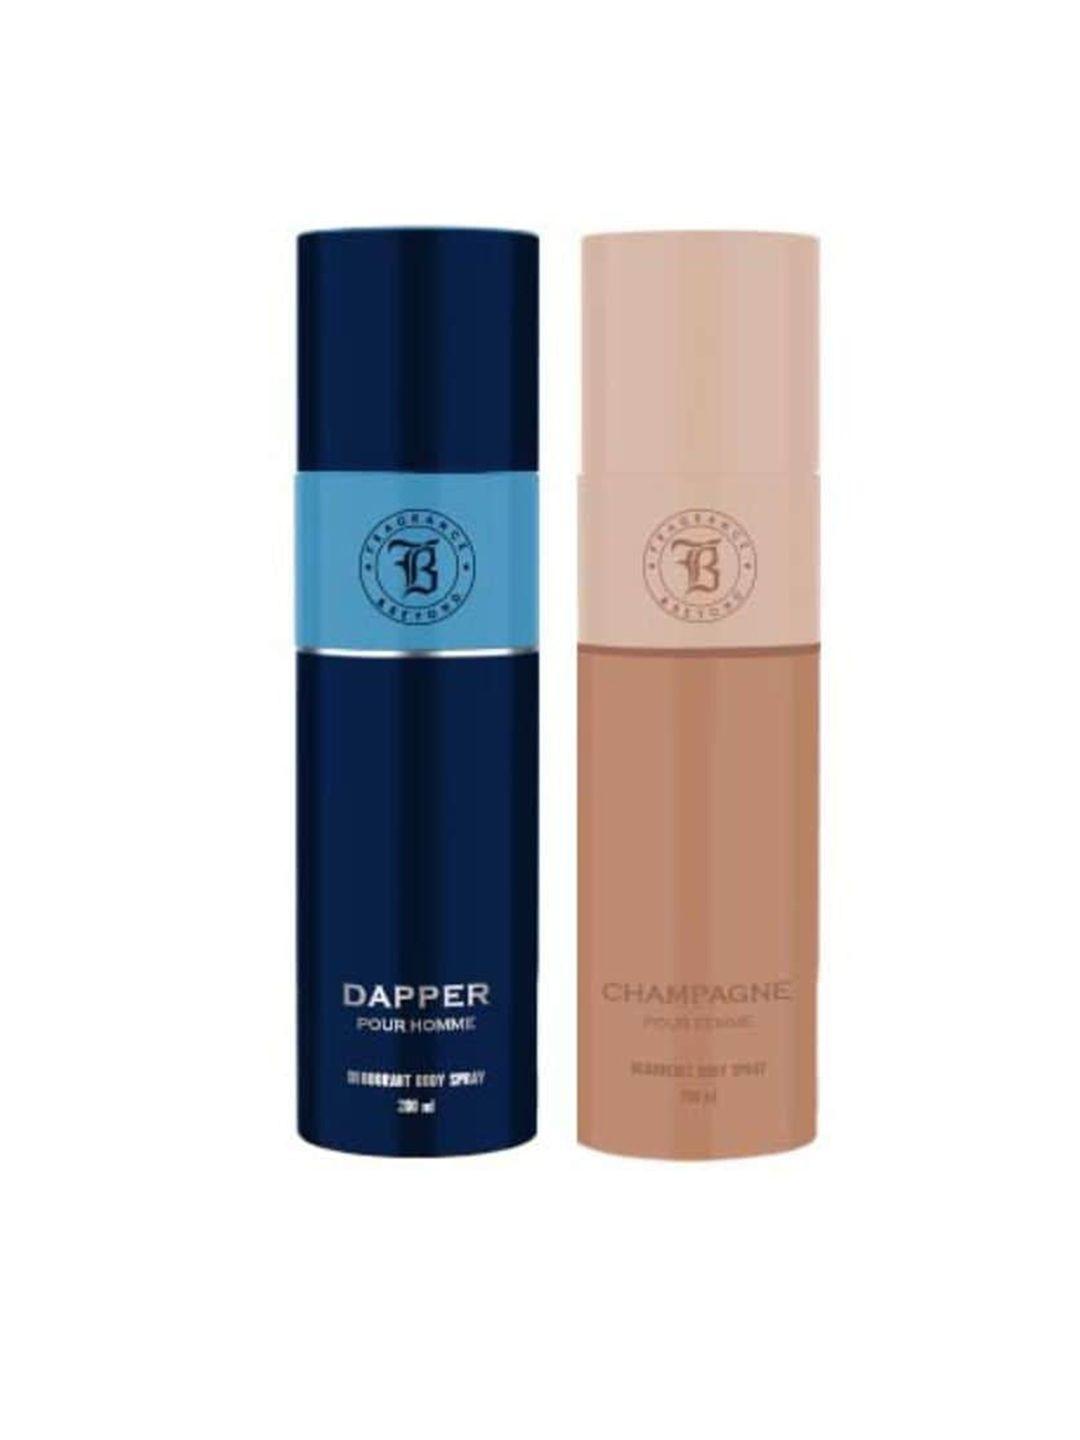 fragrance & beyond set of 2 dapper deodorant body spray & champagne deodorant body spray - 200ml each